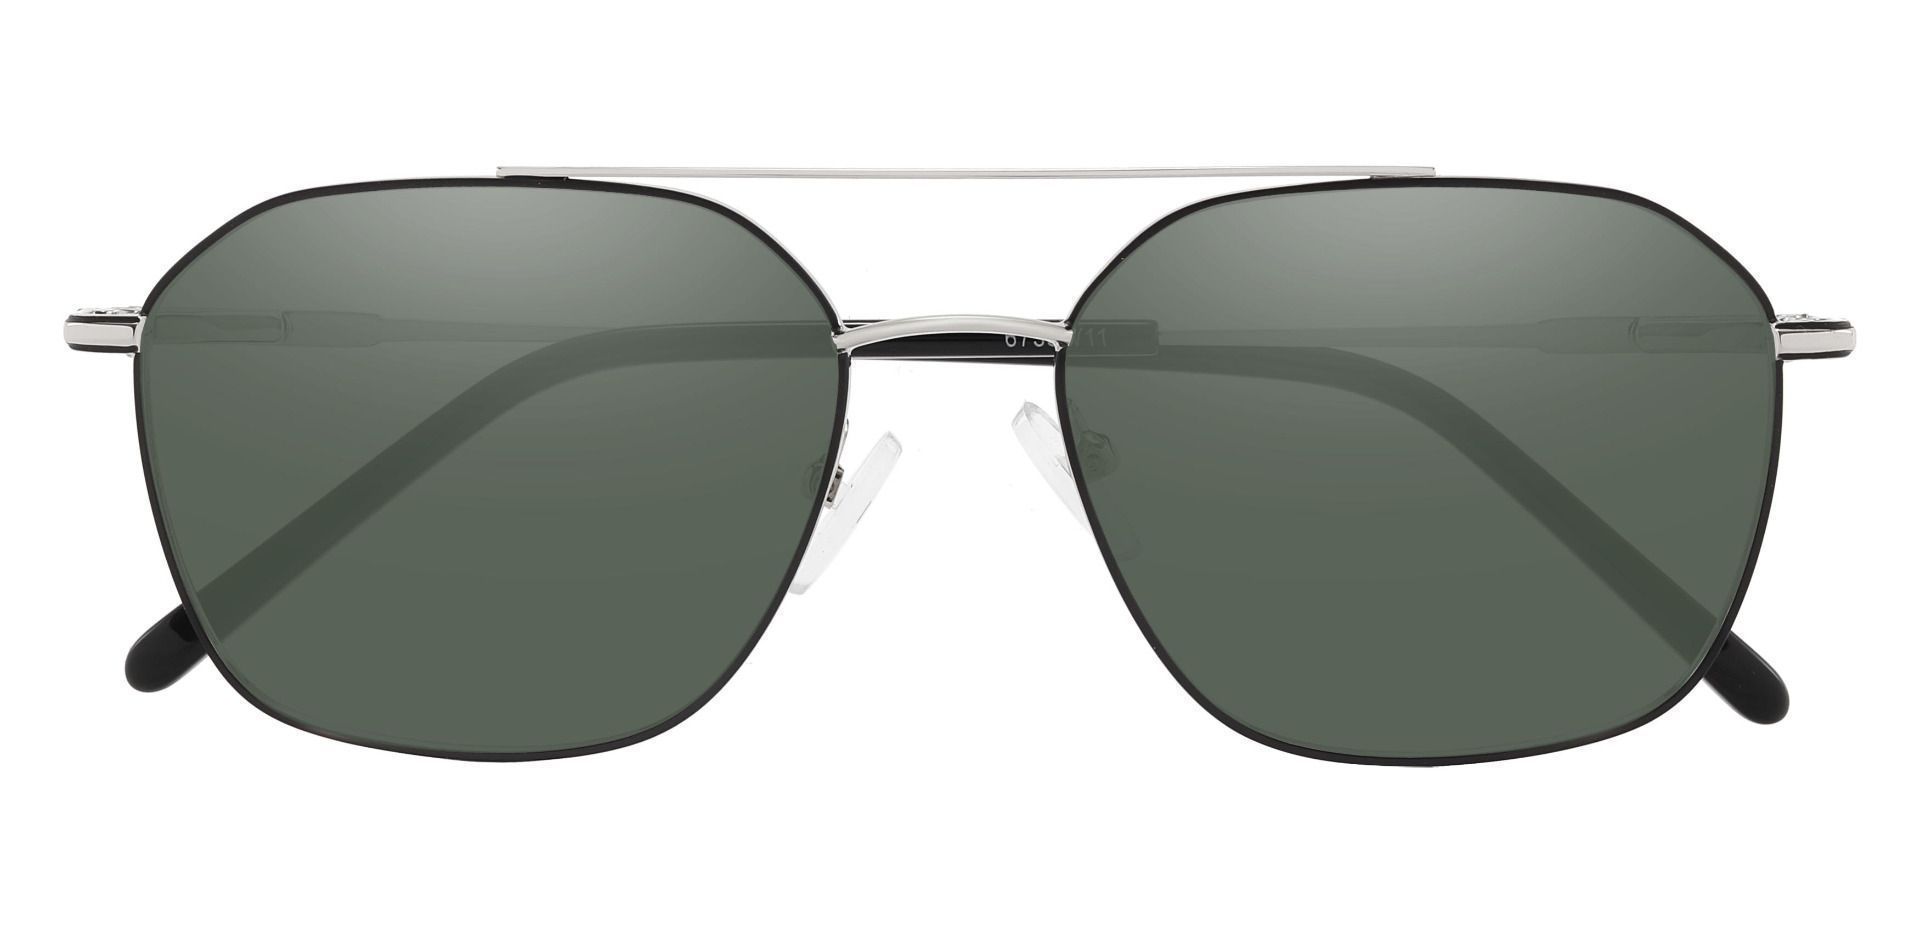 Harvey Aviator Prescription Sunglasses - Silver Frame With Green Lenses